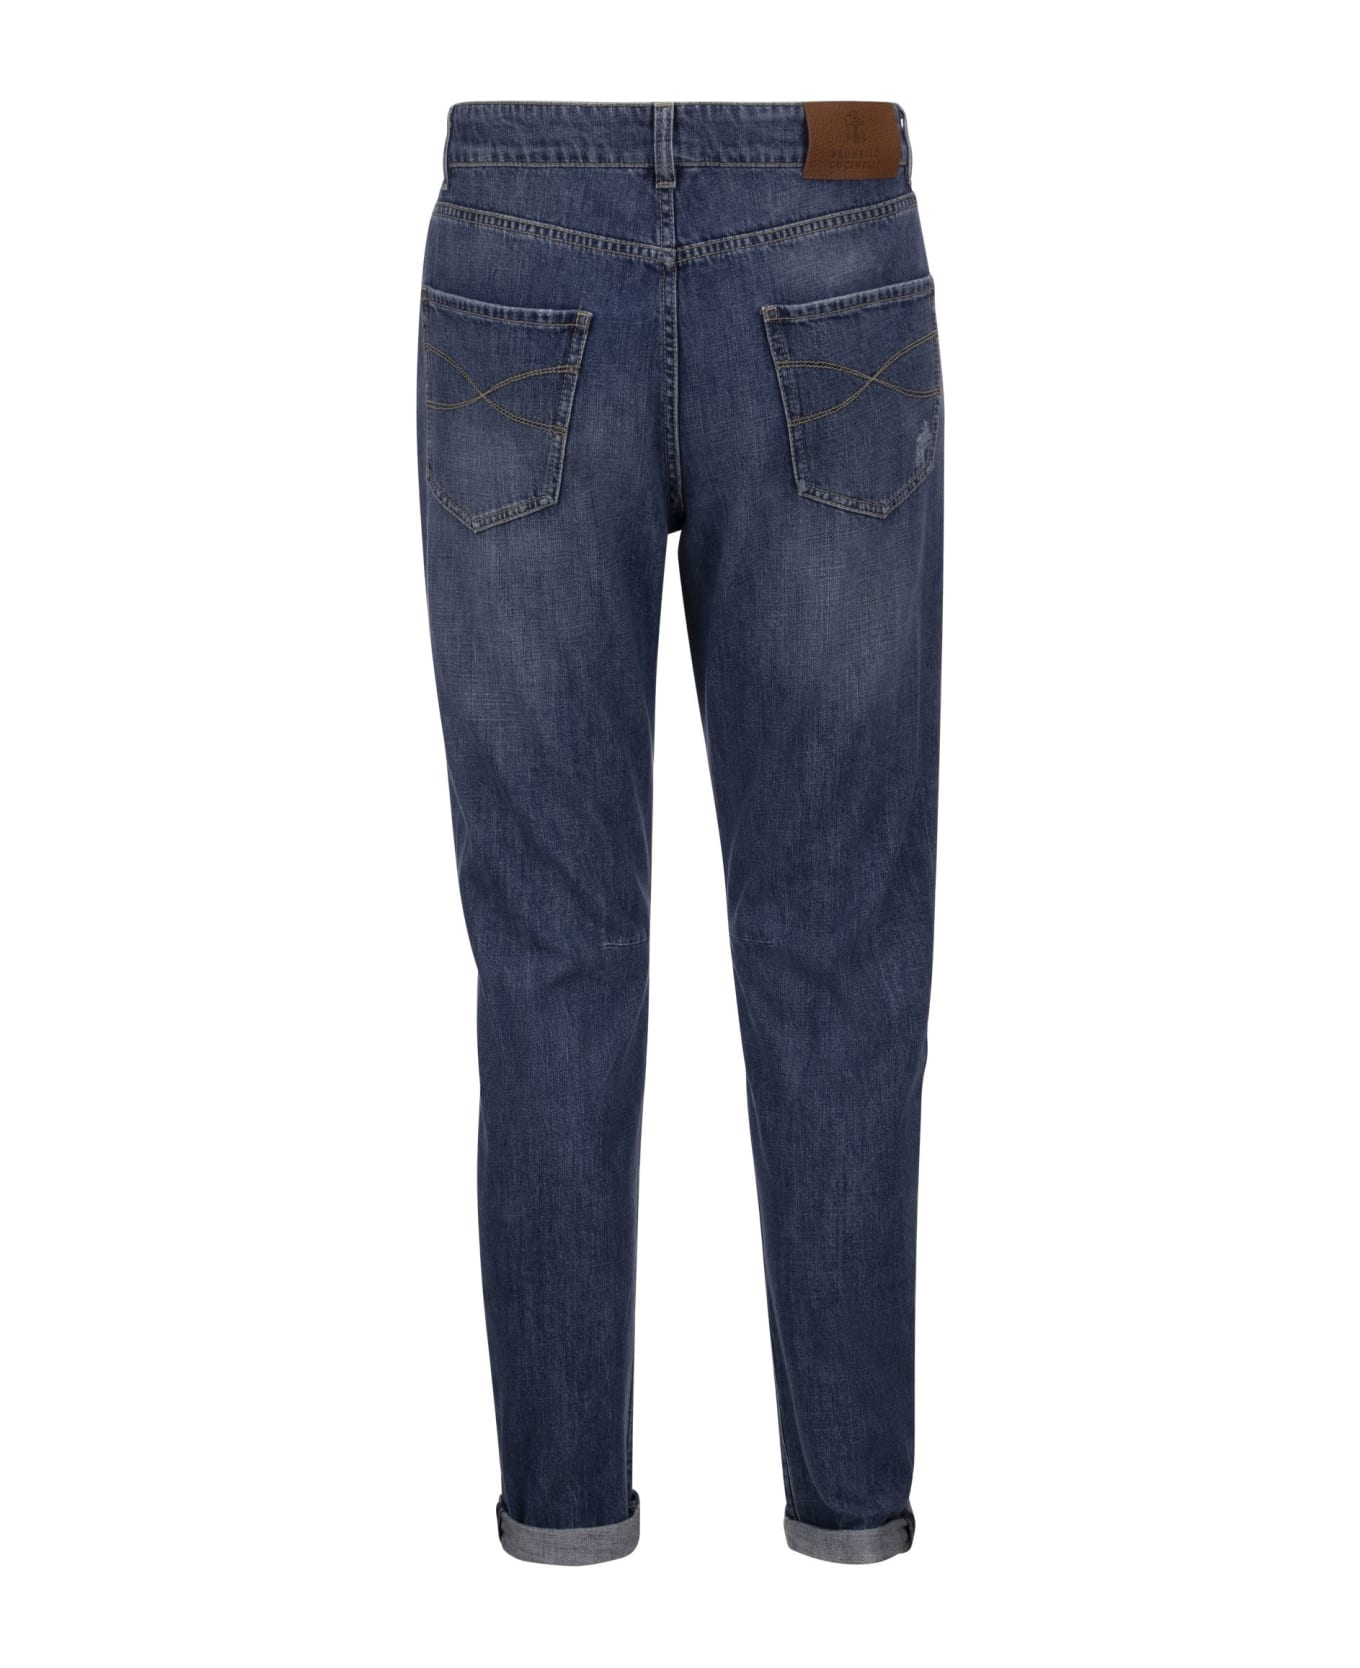 Brunello Cucinelli Five-pocket Leisure Fit Trousers - Denim Blue デニム